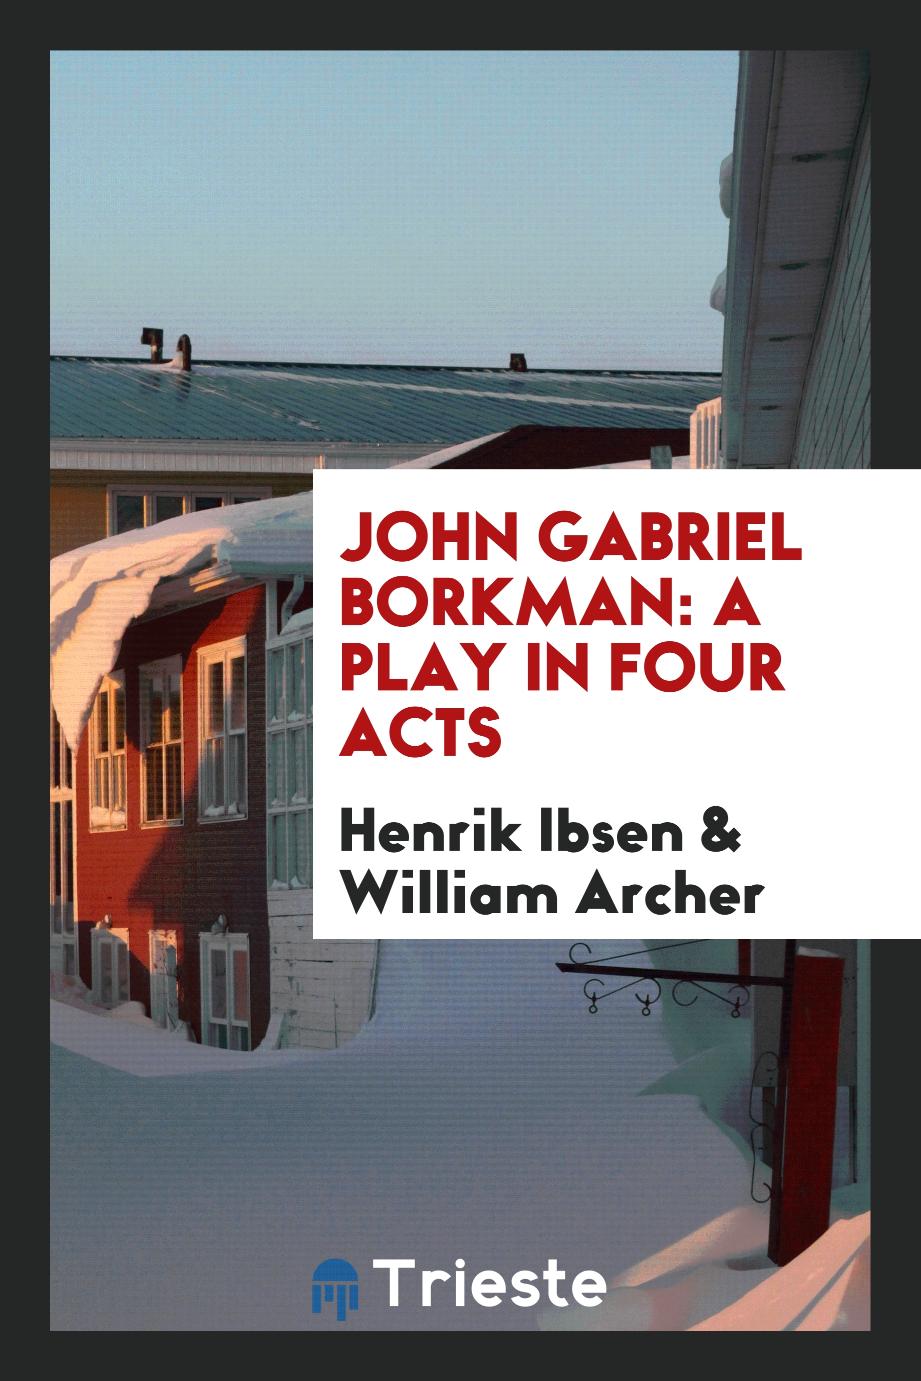 John Gabriel Borkman: A Play in Four Acts